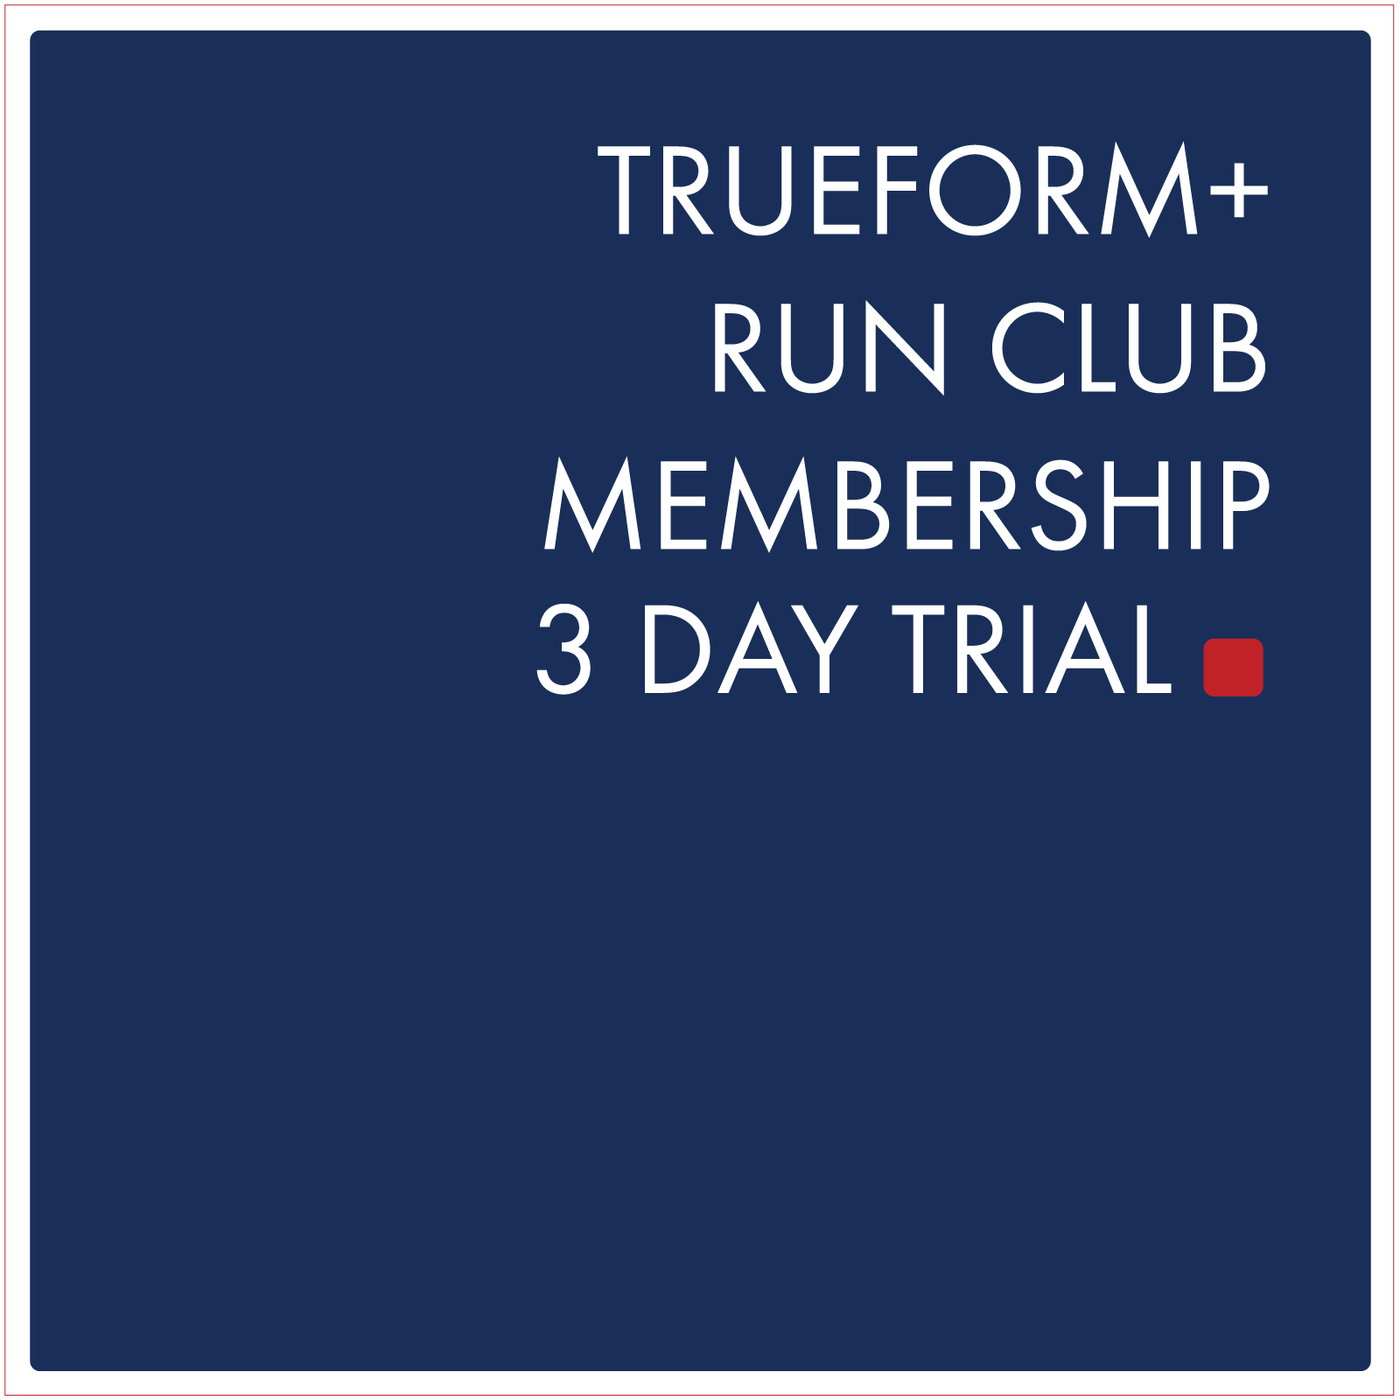 TRUEFORM.PLUS Run Club - Free Trial Available